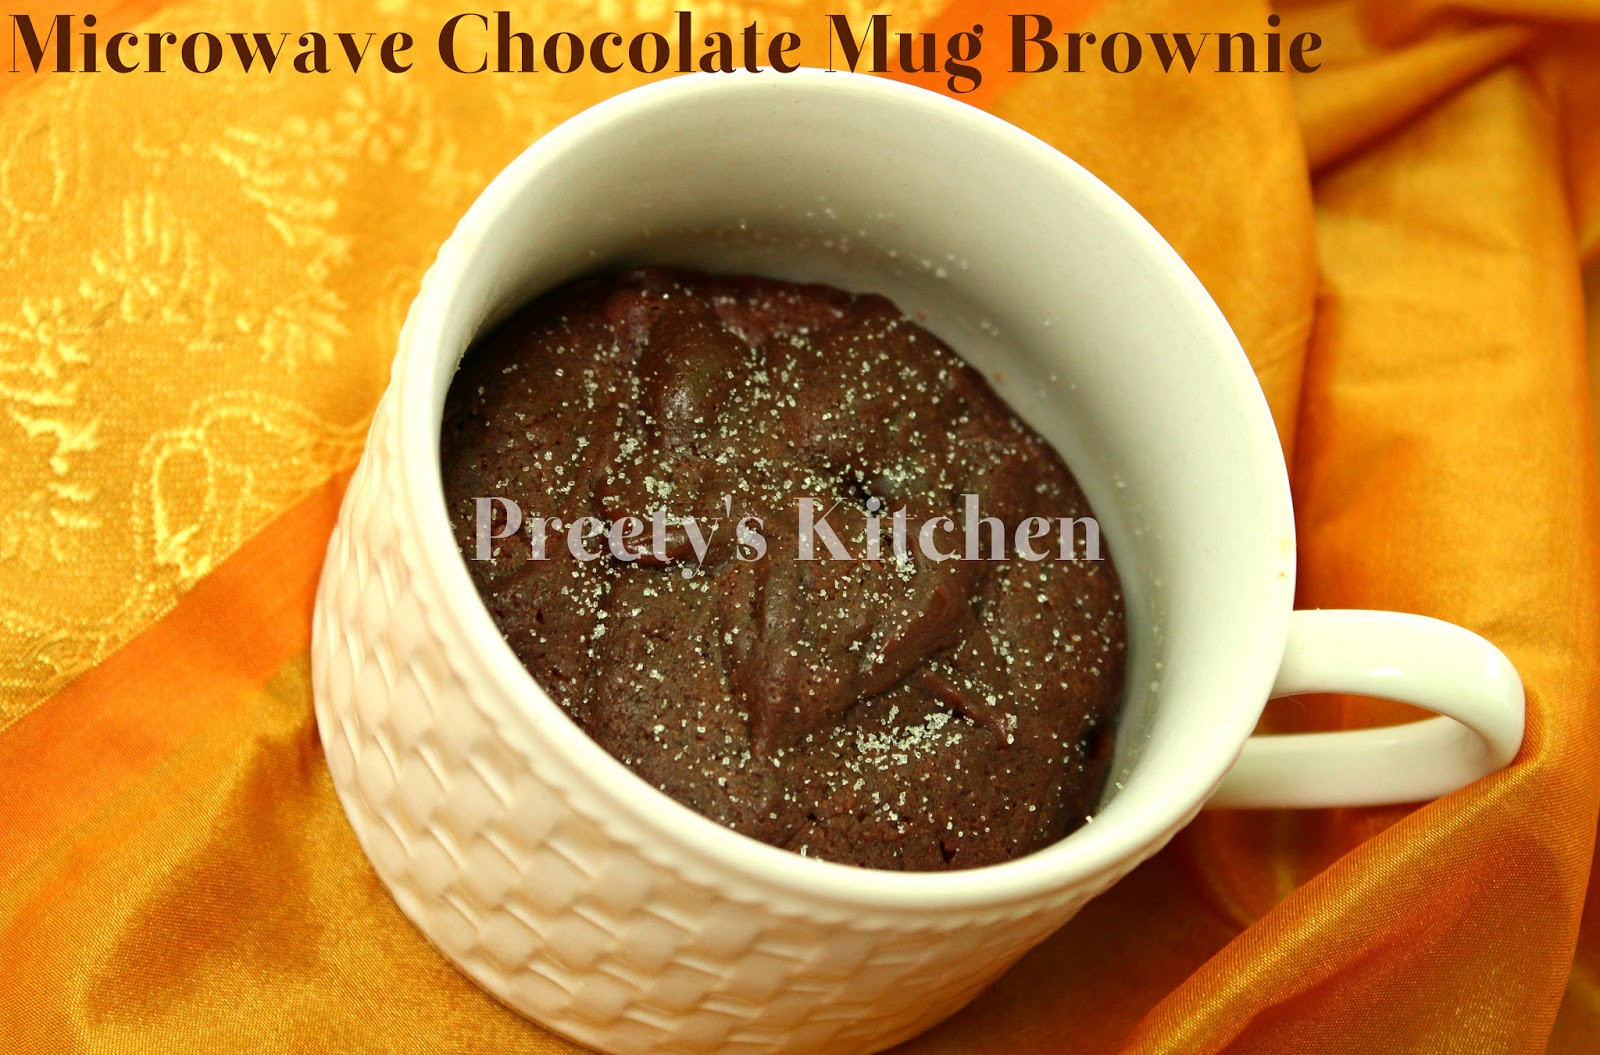 Microwave Dessert In A Mug
 Preety s Kitchen 1 Minute Microwave Chocolate Mug Brownie